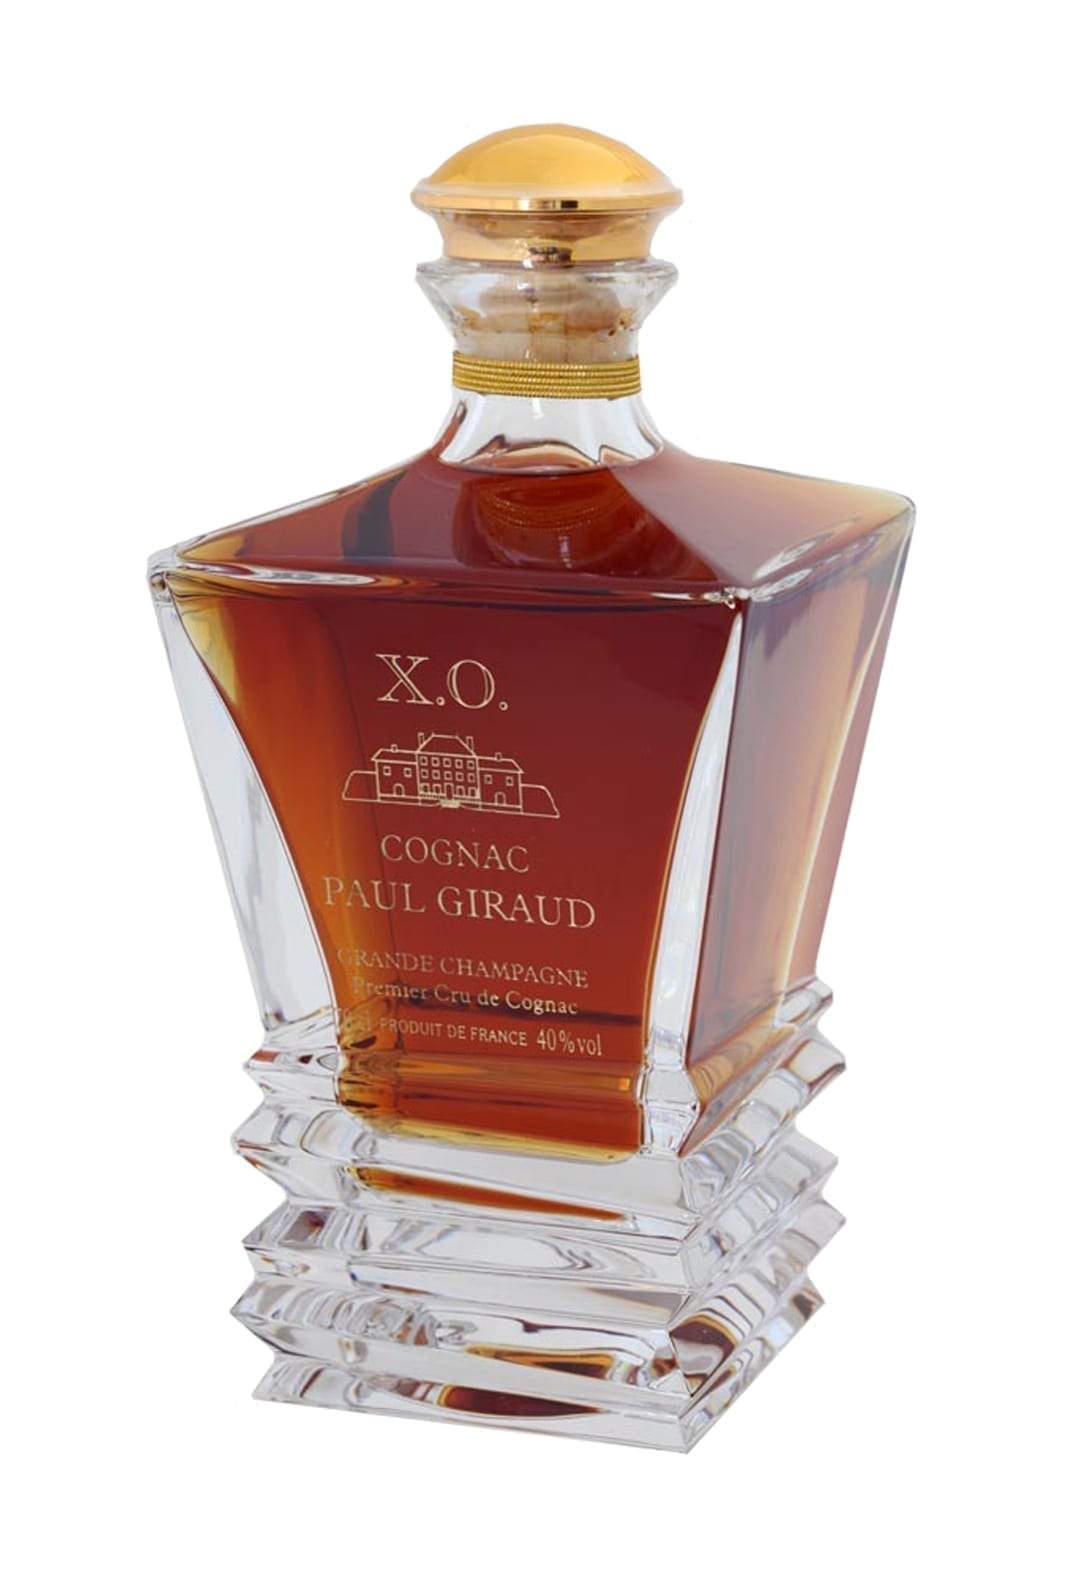 Paul Giraud XO Rocky 25 years 40% 700ml | Brandy | Shop online at Spirits of France